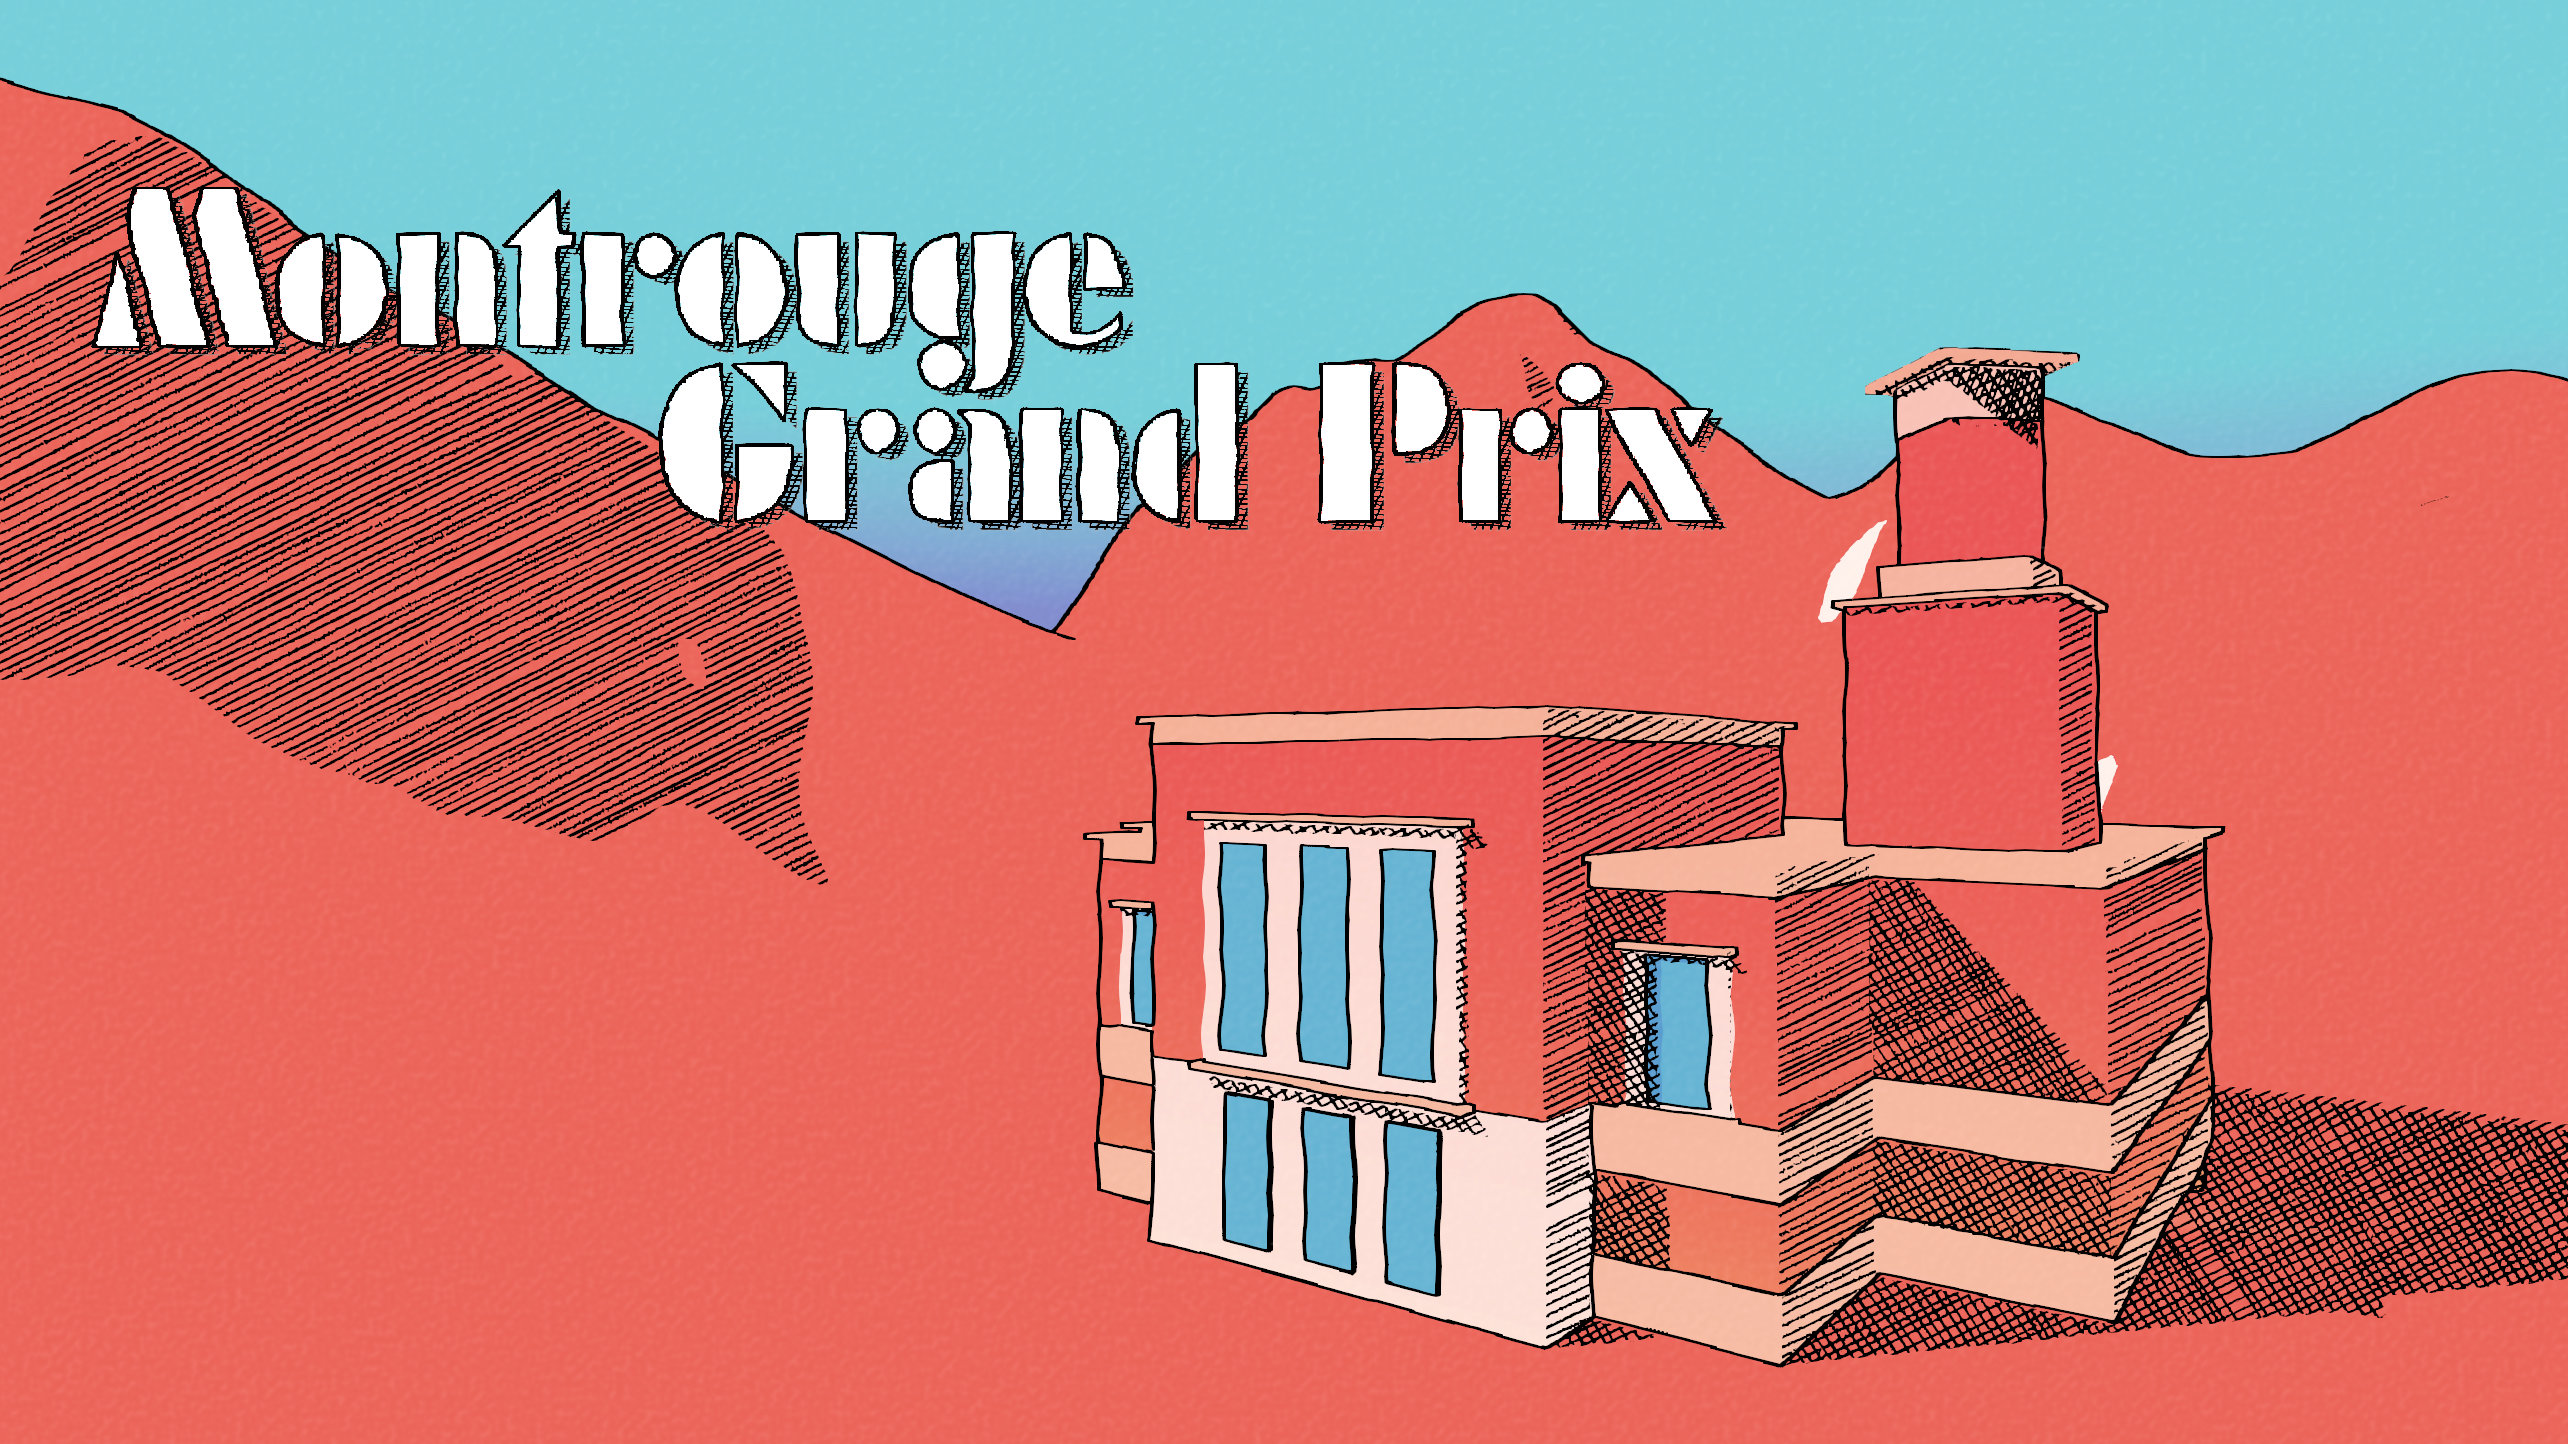 Montrouge Grand Prix